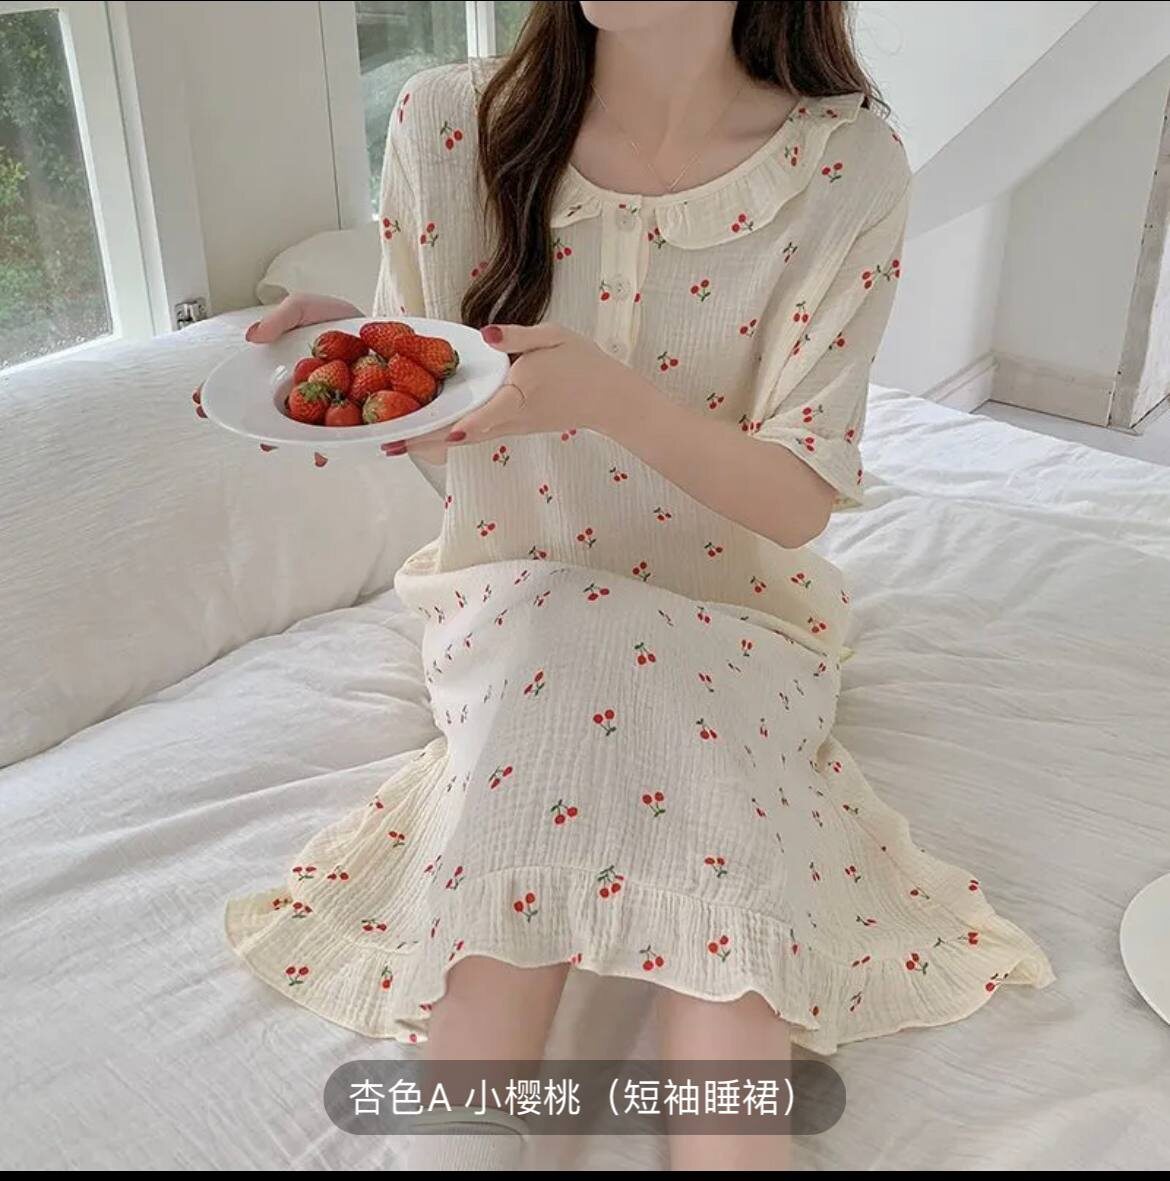 Пижамы, пижамы платье арт.491367